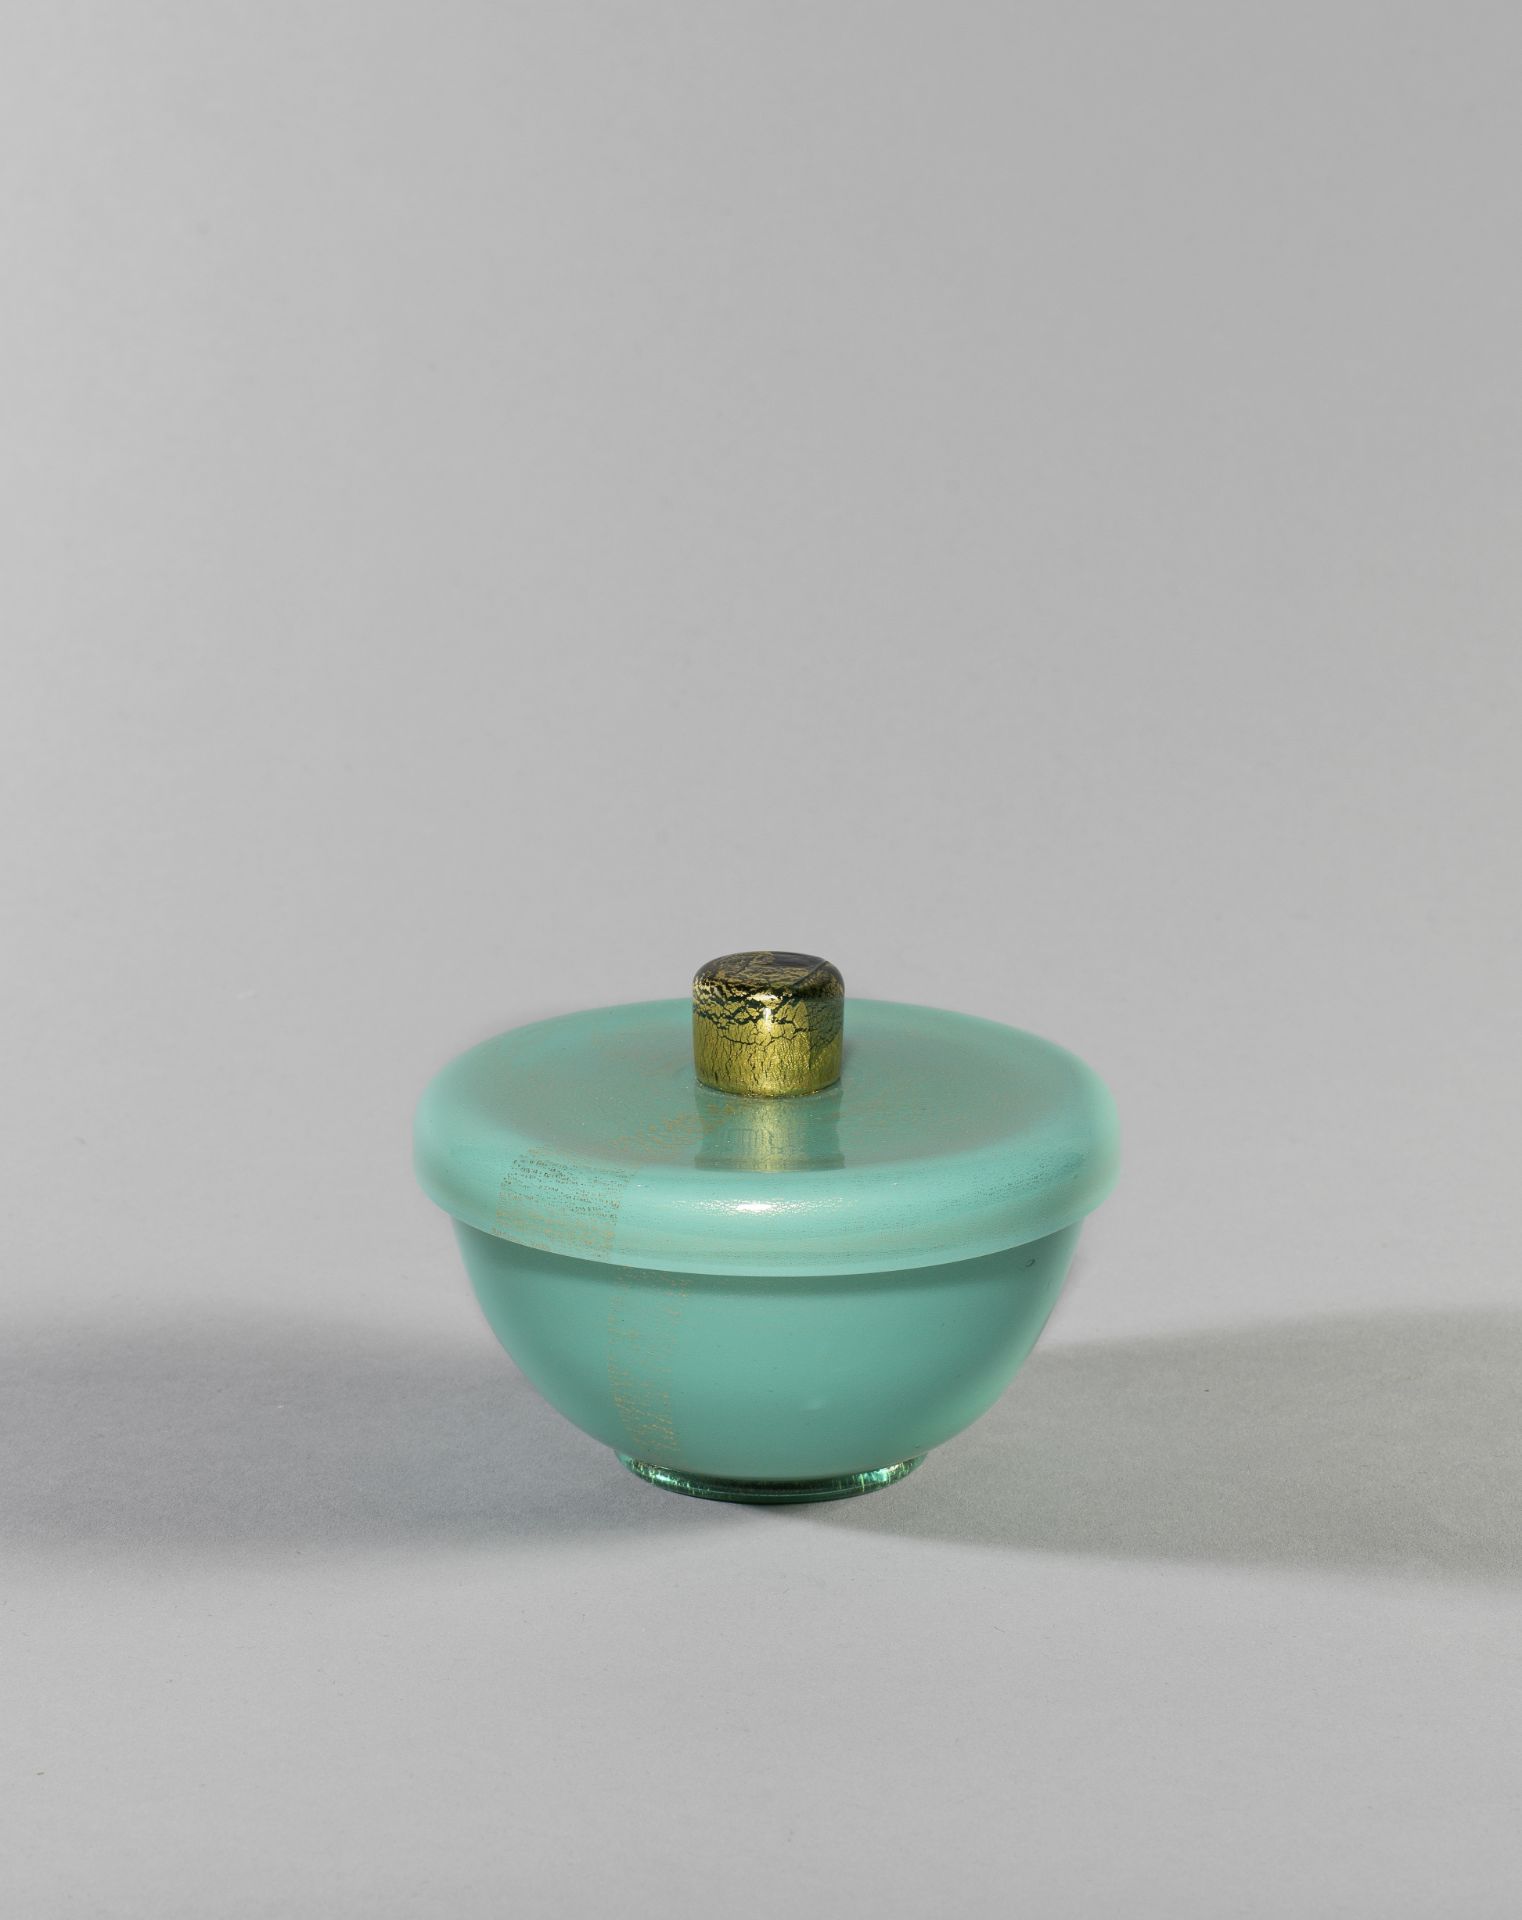 Carlo Scarpa Lidded bowl, model no. 651A, circa 1932